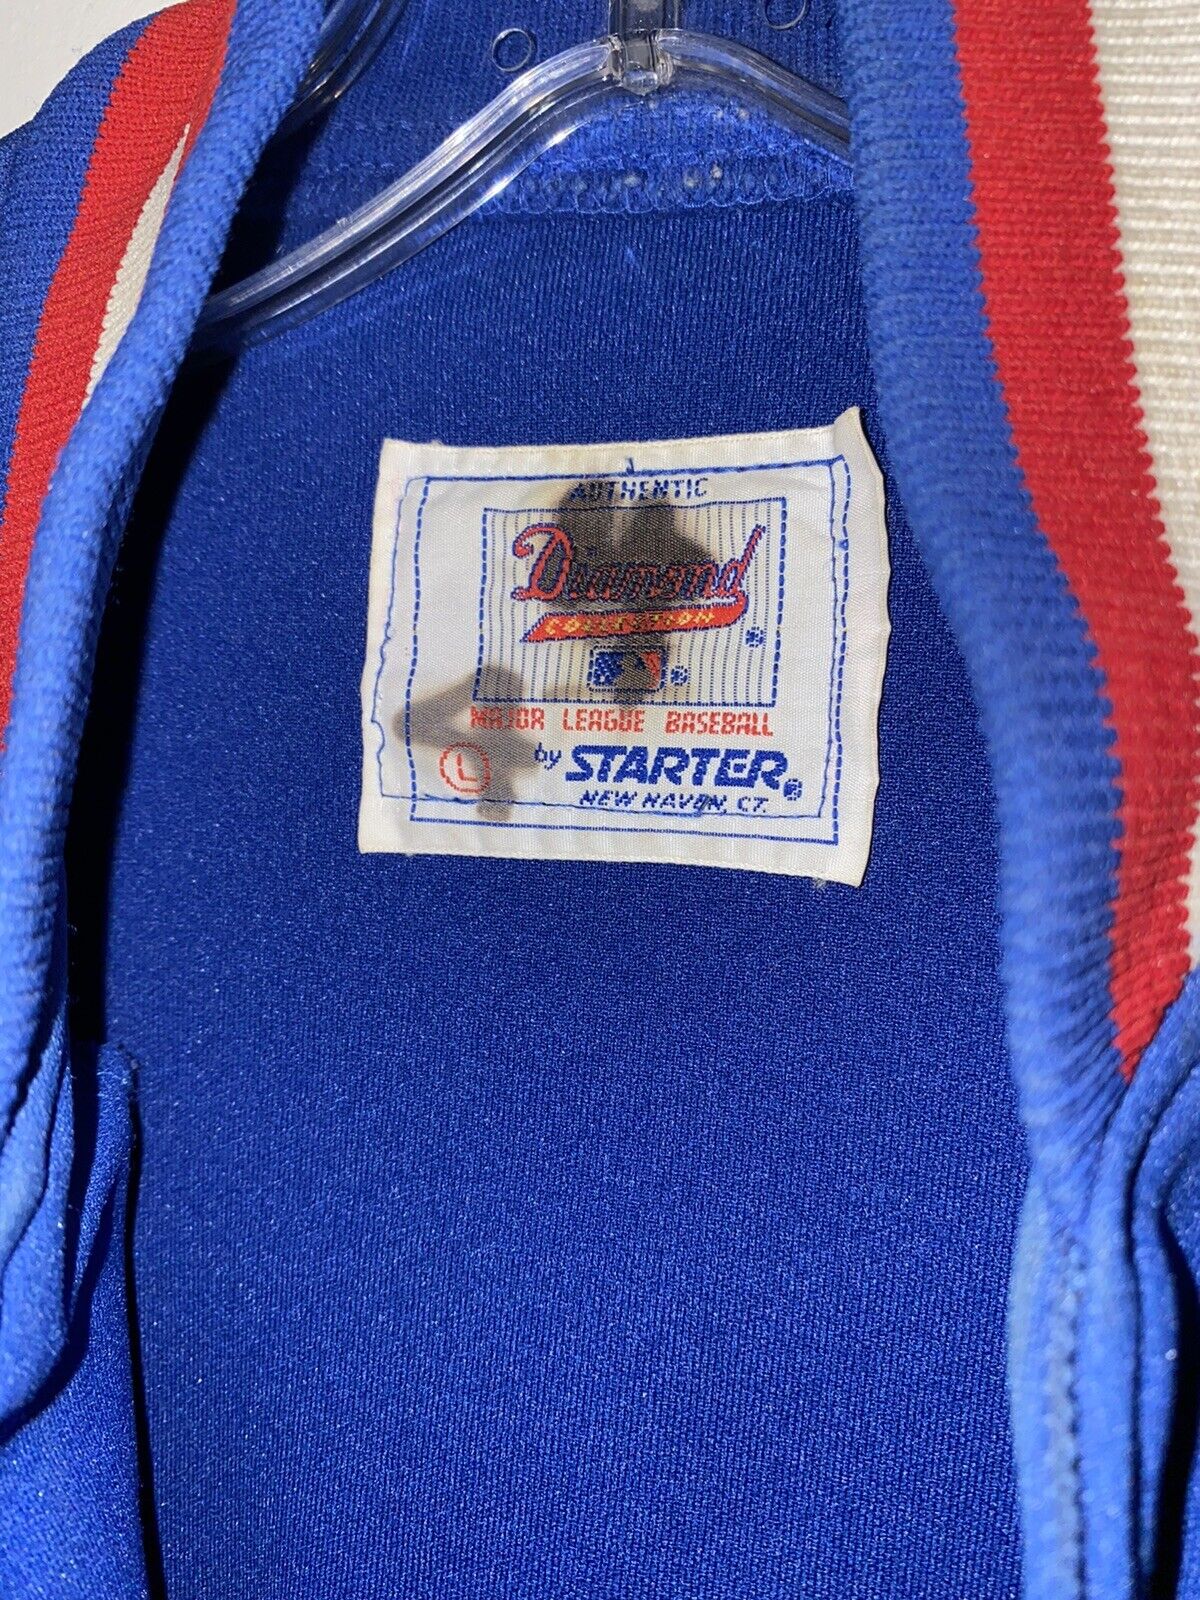 STARTER, Jackets & Coats, Vintage Texas Ranger Starter Jacket Type Of  Jacket The Players Wore Mint